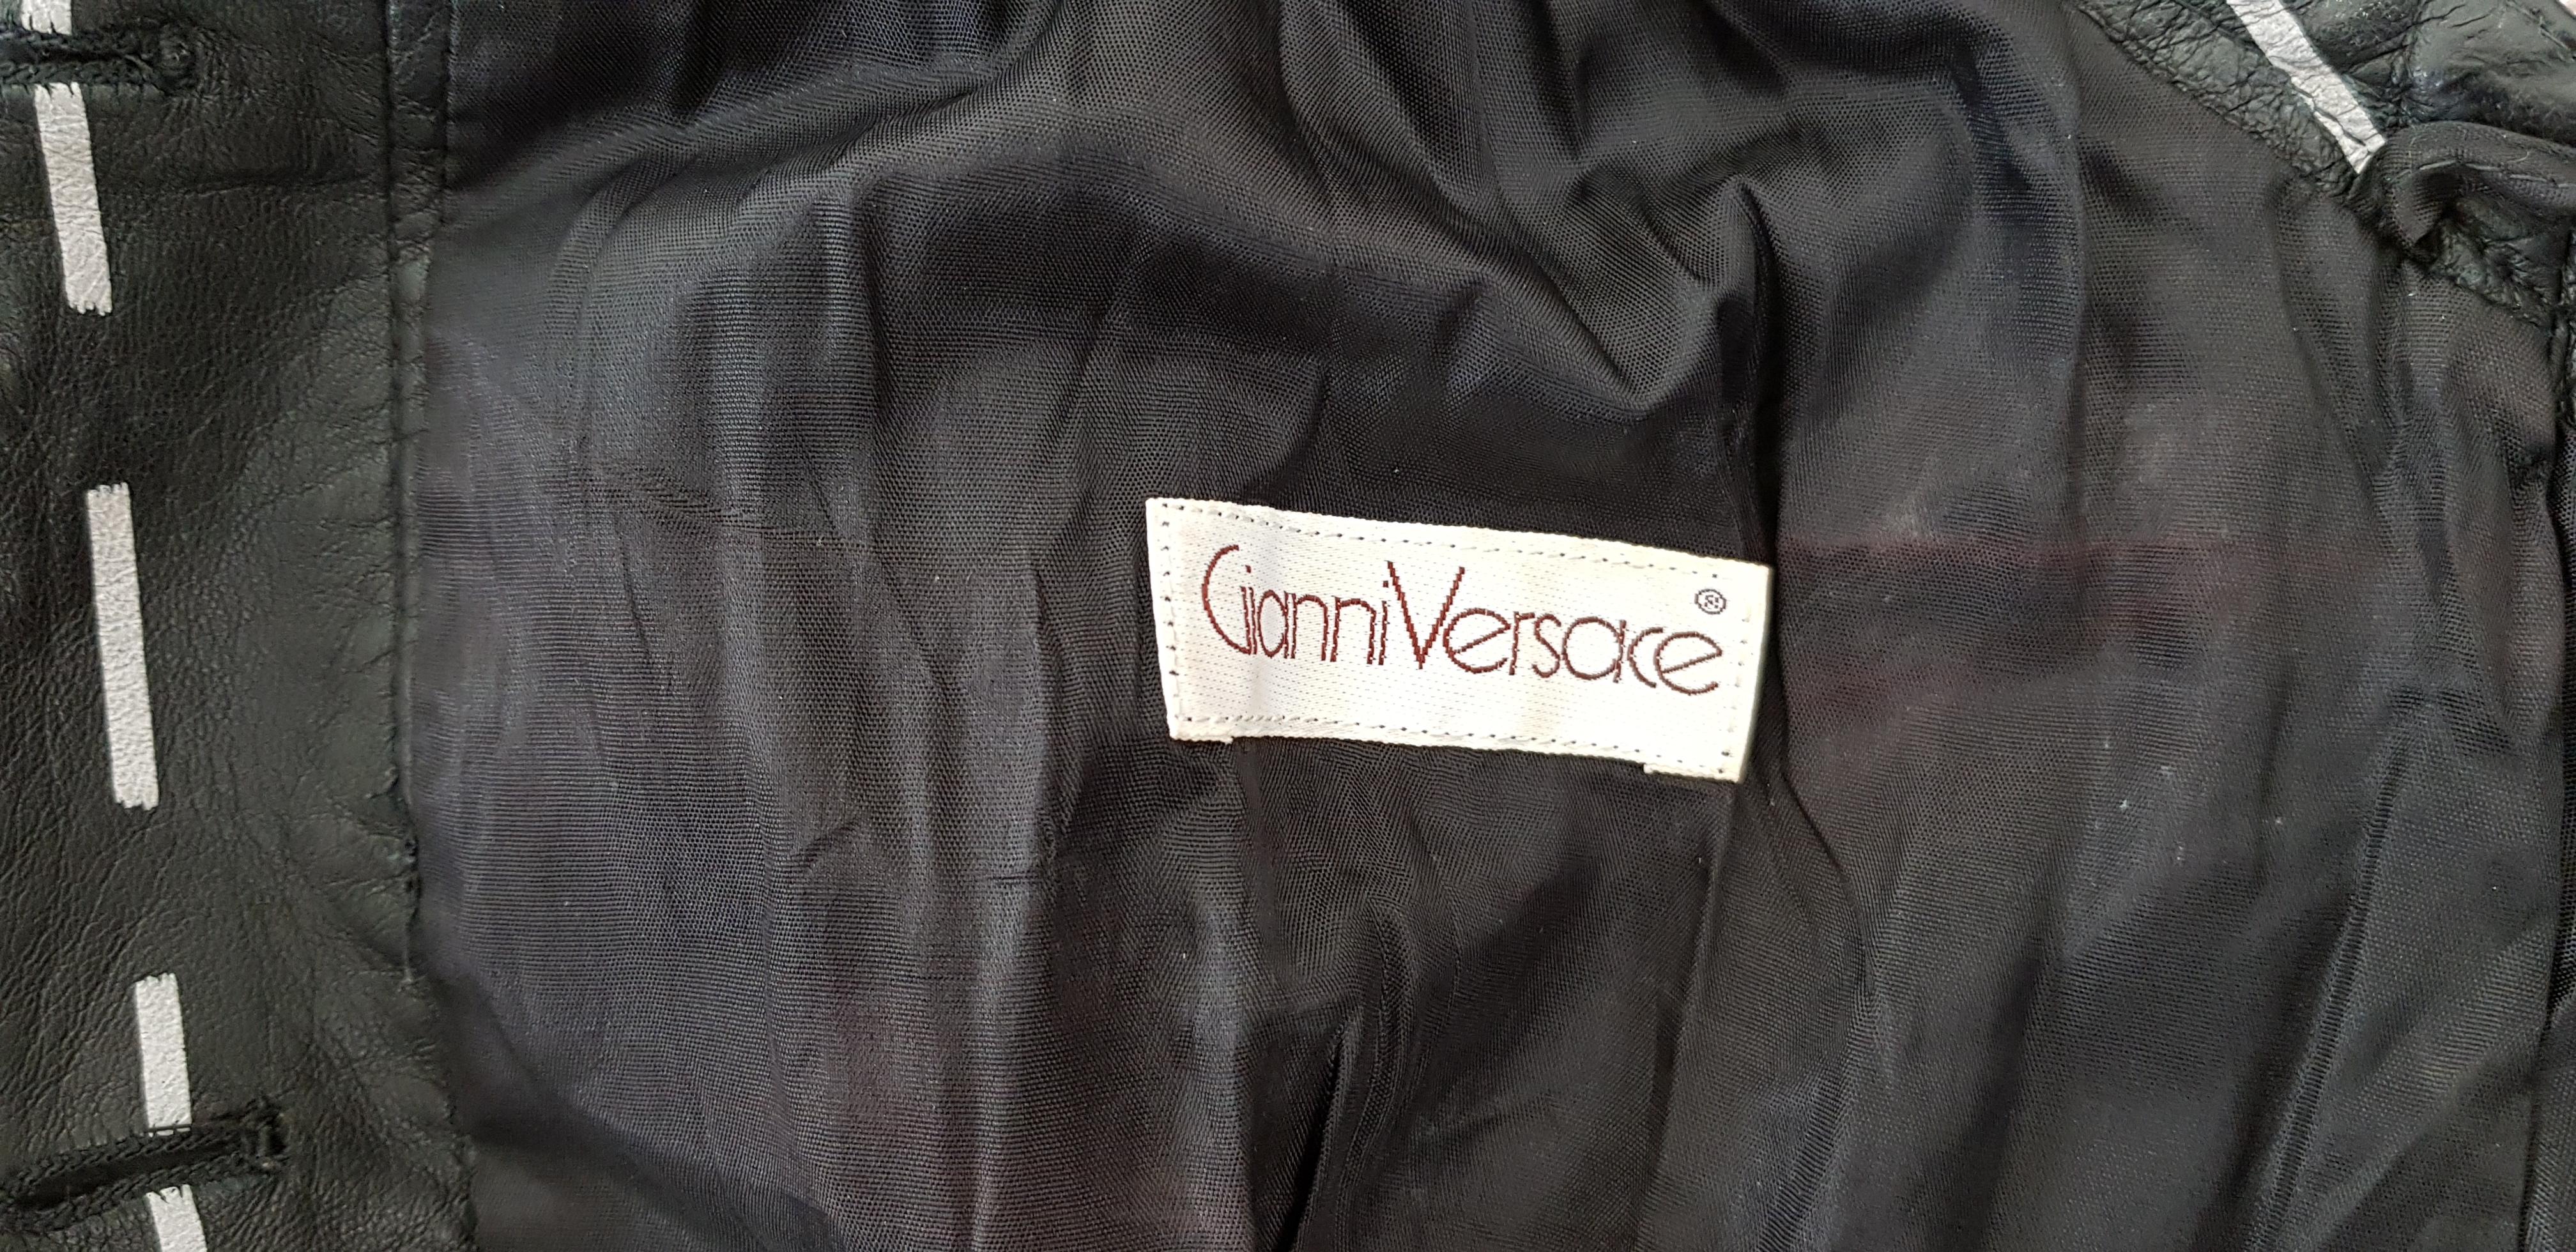 Gianni VERSACE Couture Unique Design Black Leather White Lines  For Sale 5